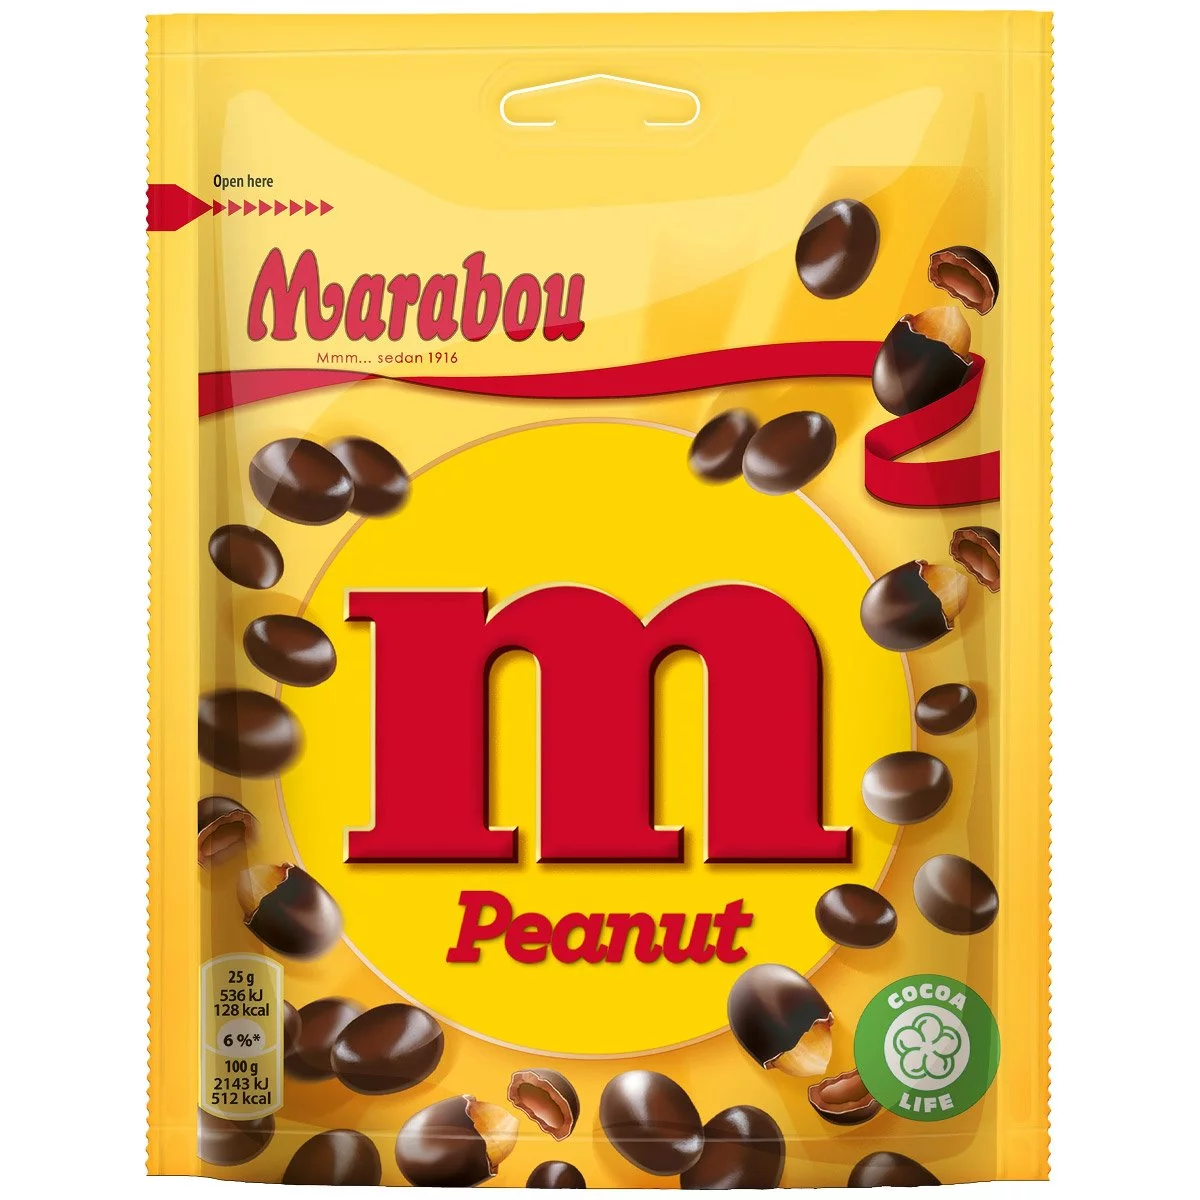 Marabou M Peanut Partysize (200g) 1